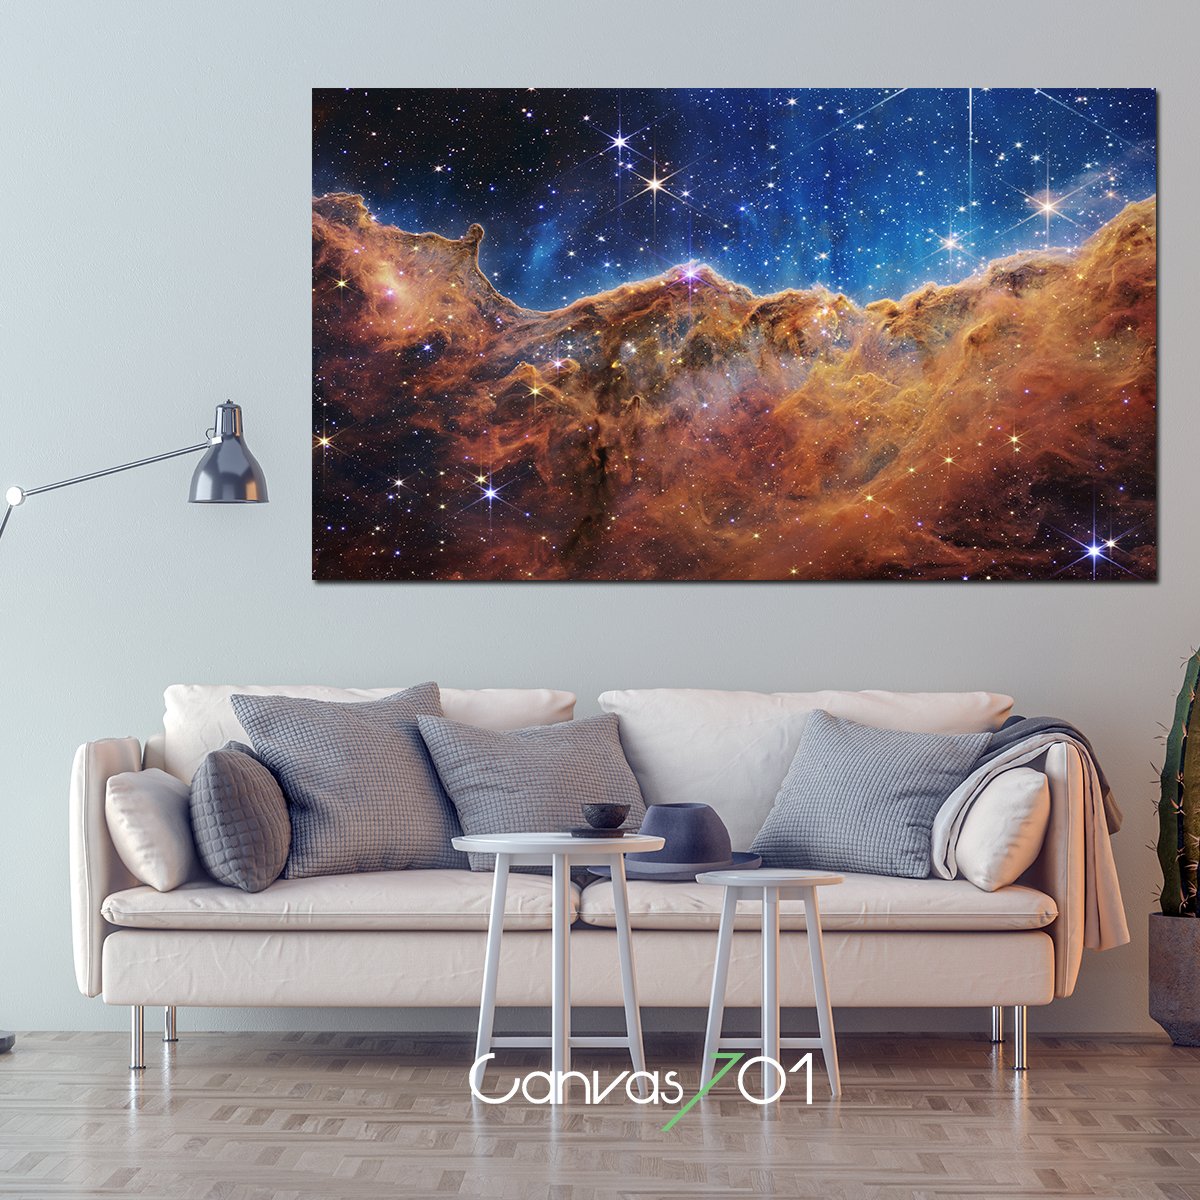 Canvas701 | James Webb Uzay Teleskobu Kanvas Tablo